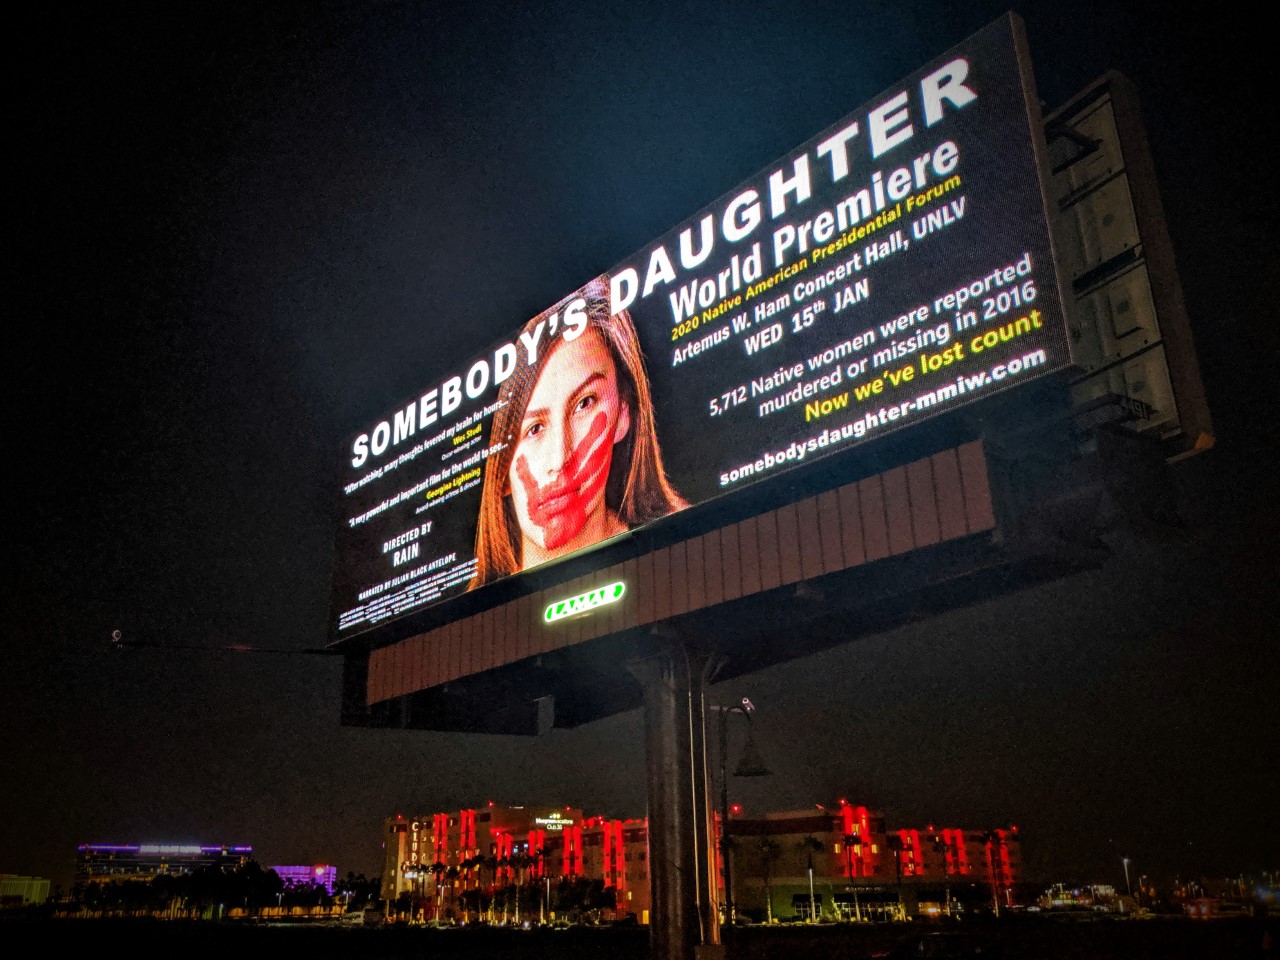 Somebody's Daughter billboard in Las Vegas